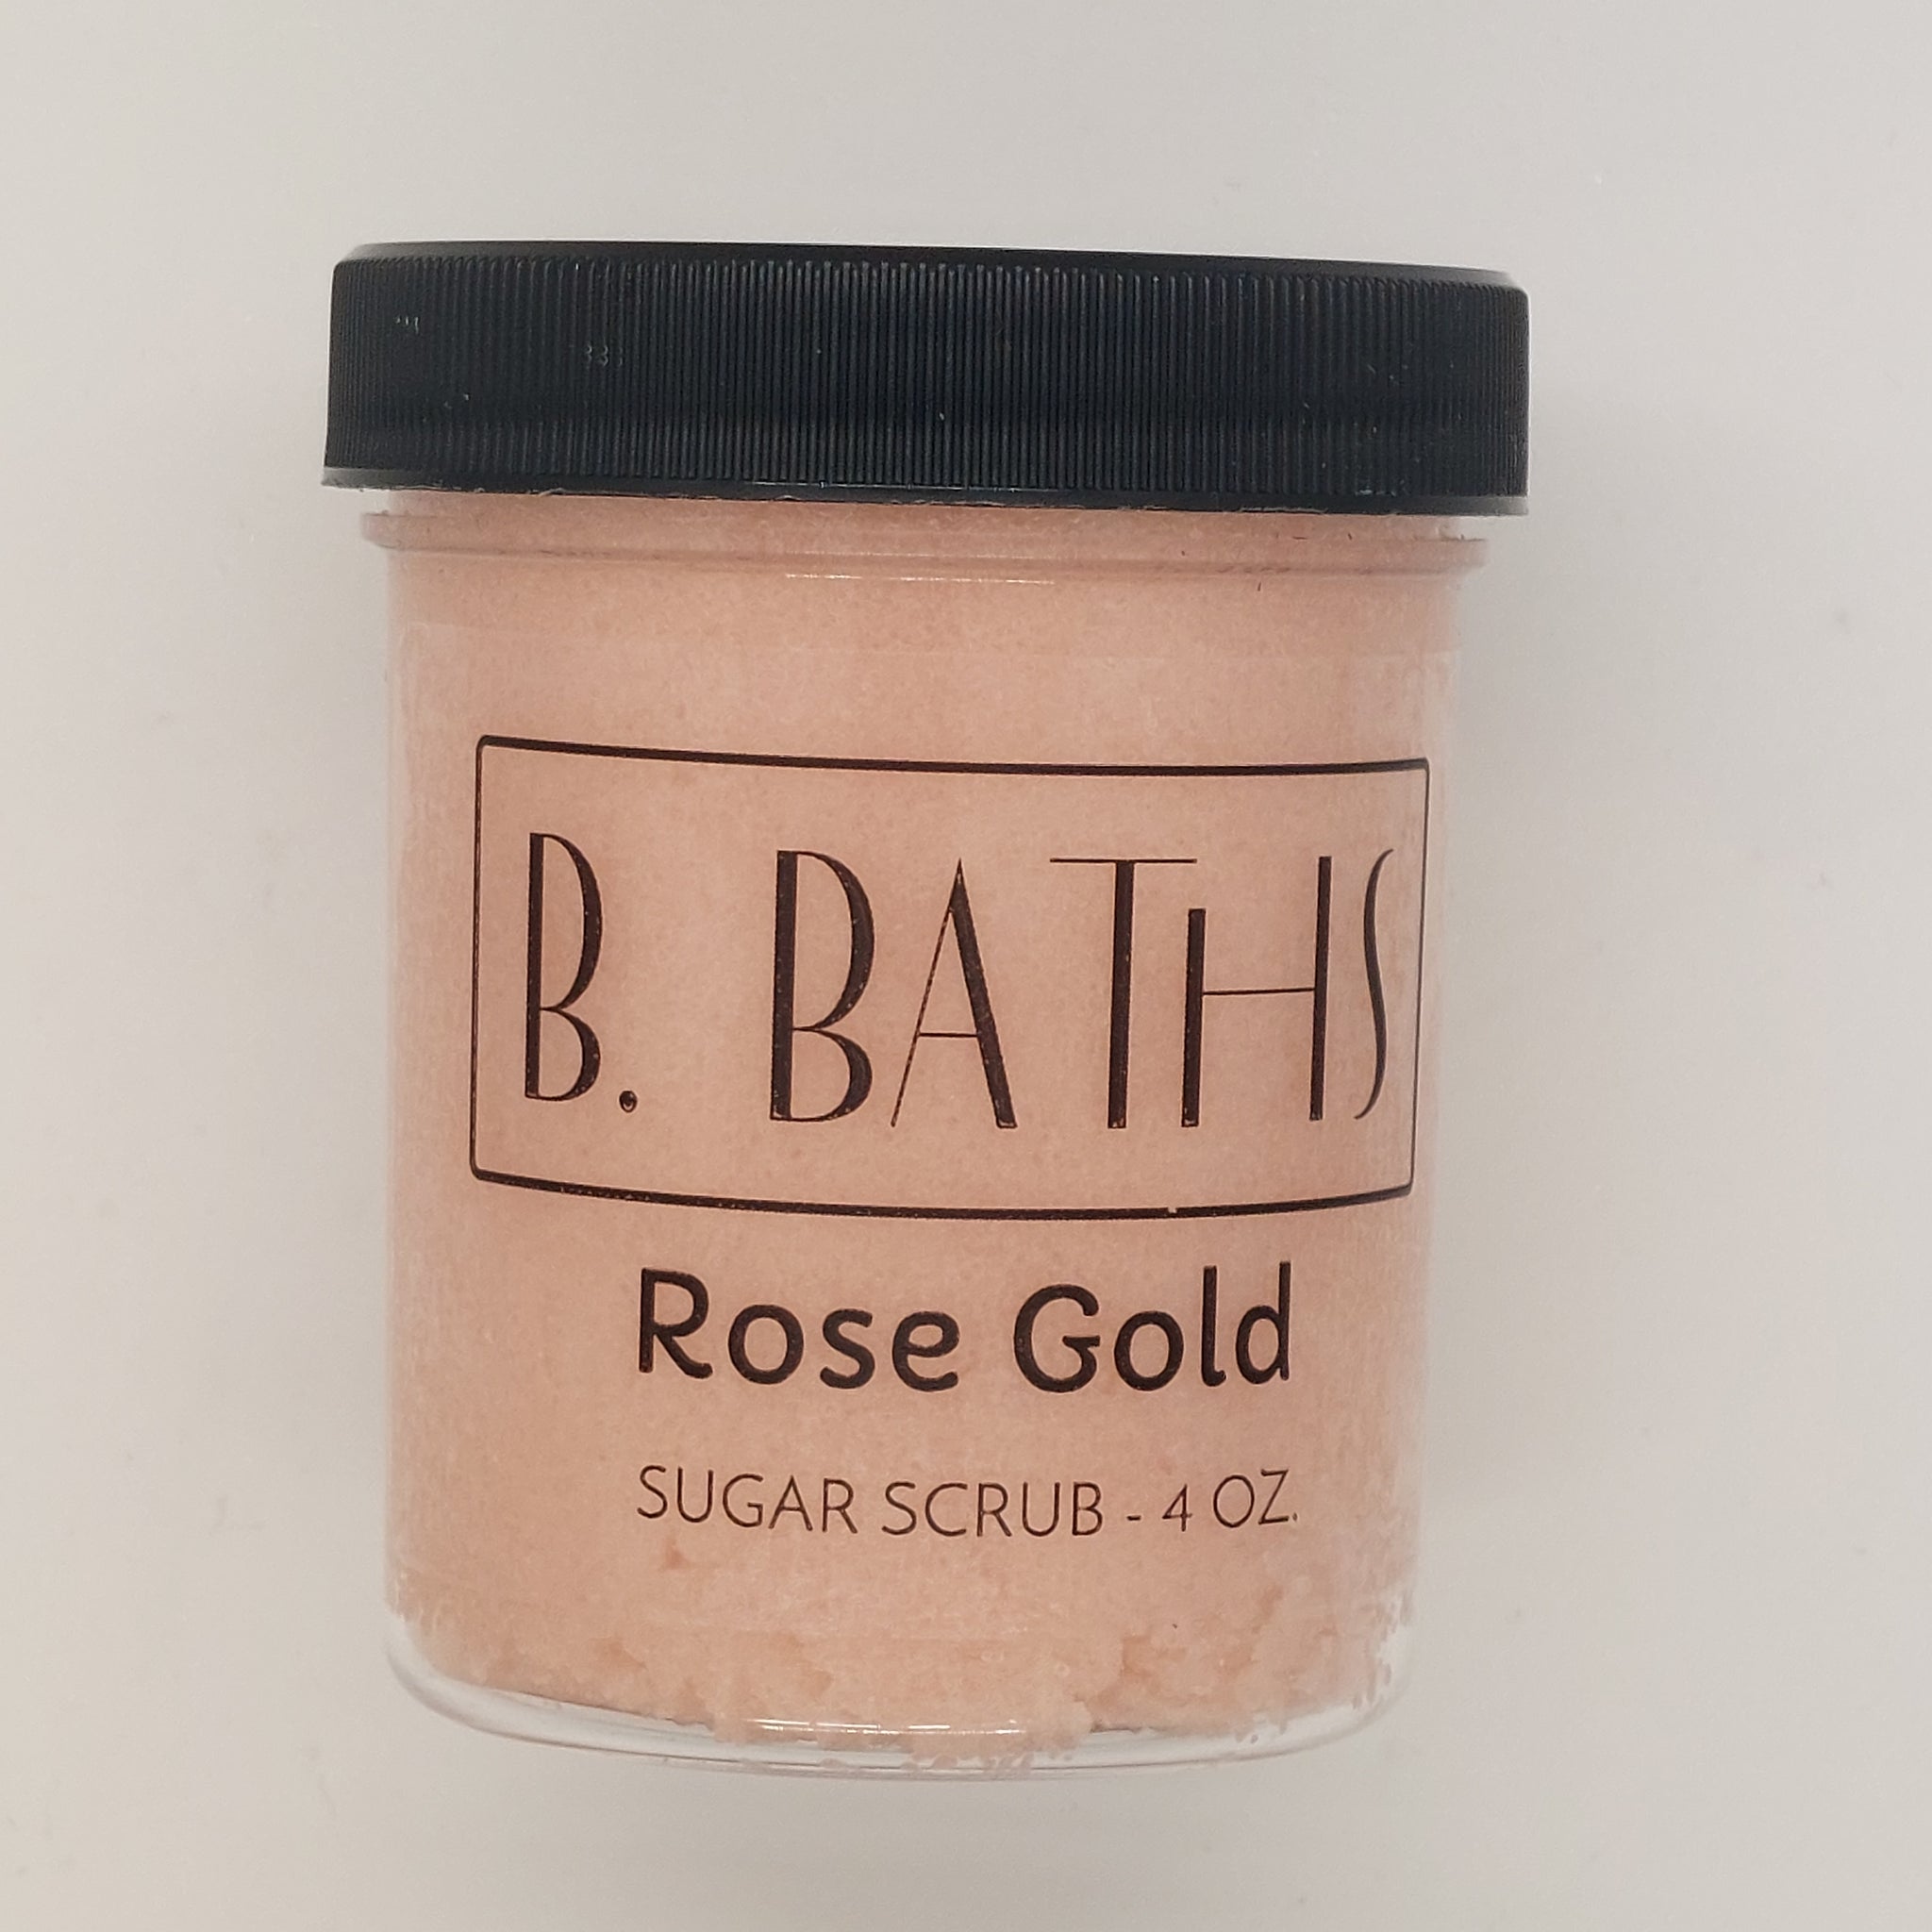 Rose Gold Sugar Scrub